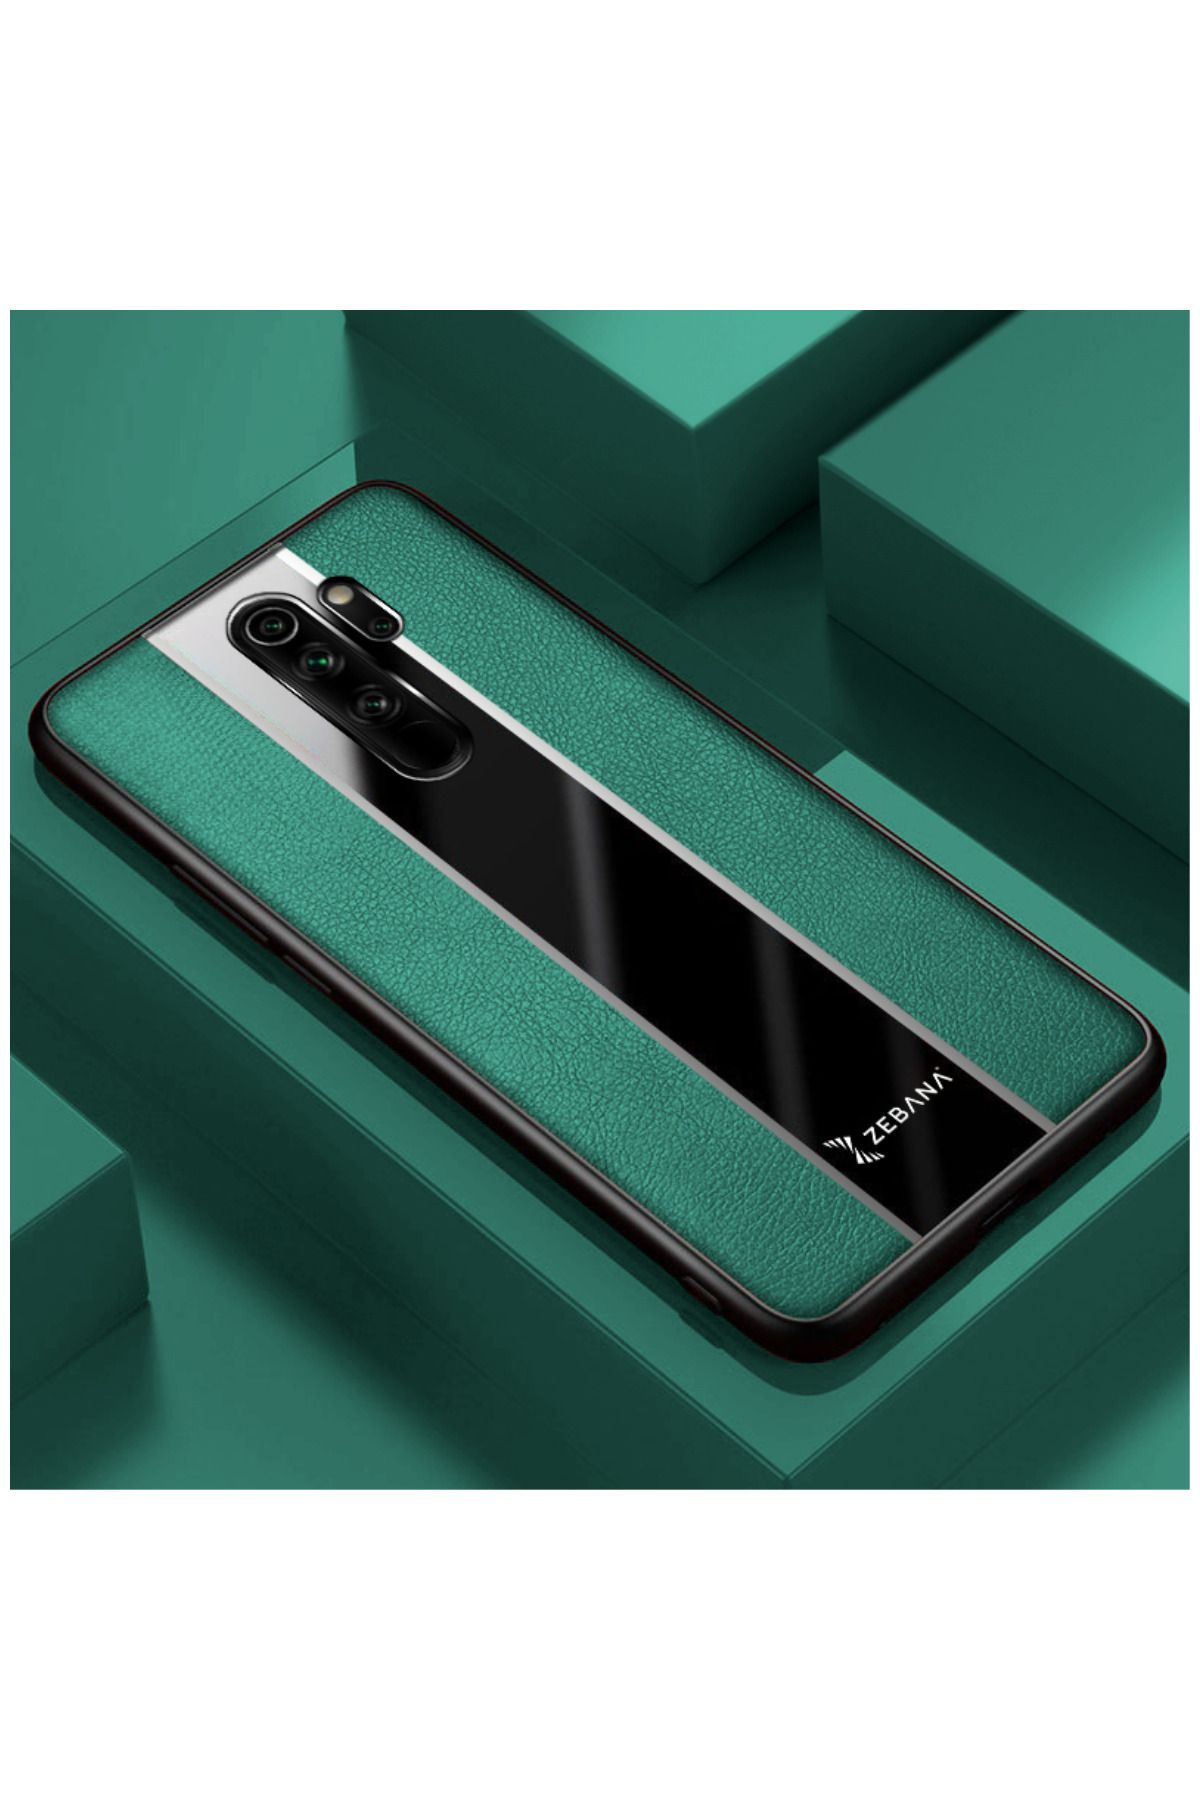 Zebana Xiaomi Redmi Note 8 Pro Uyumlu Kılıf Premium Deri Kılıf Yeşil